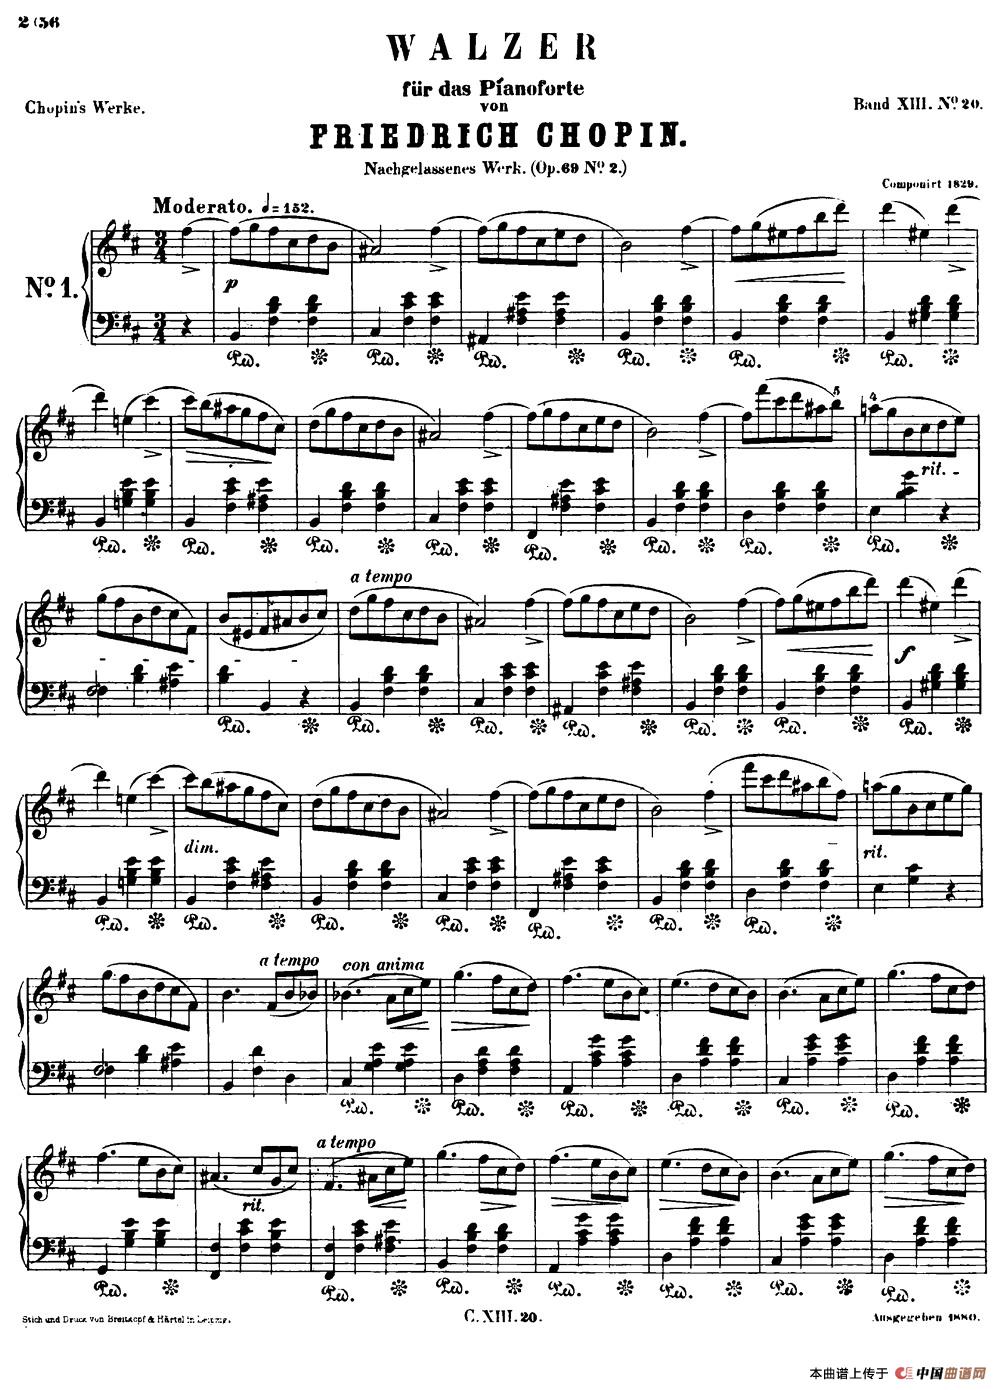 b小调圆舞曲Op.69-2